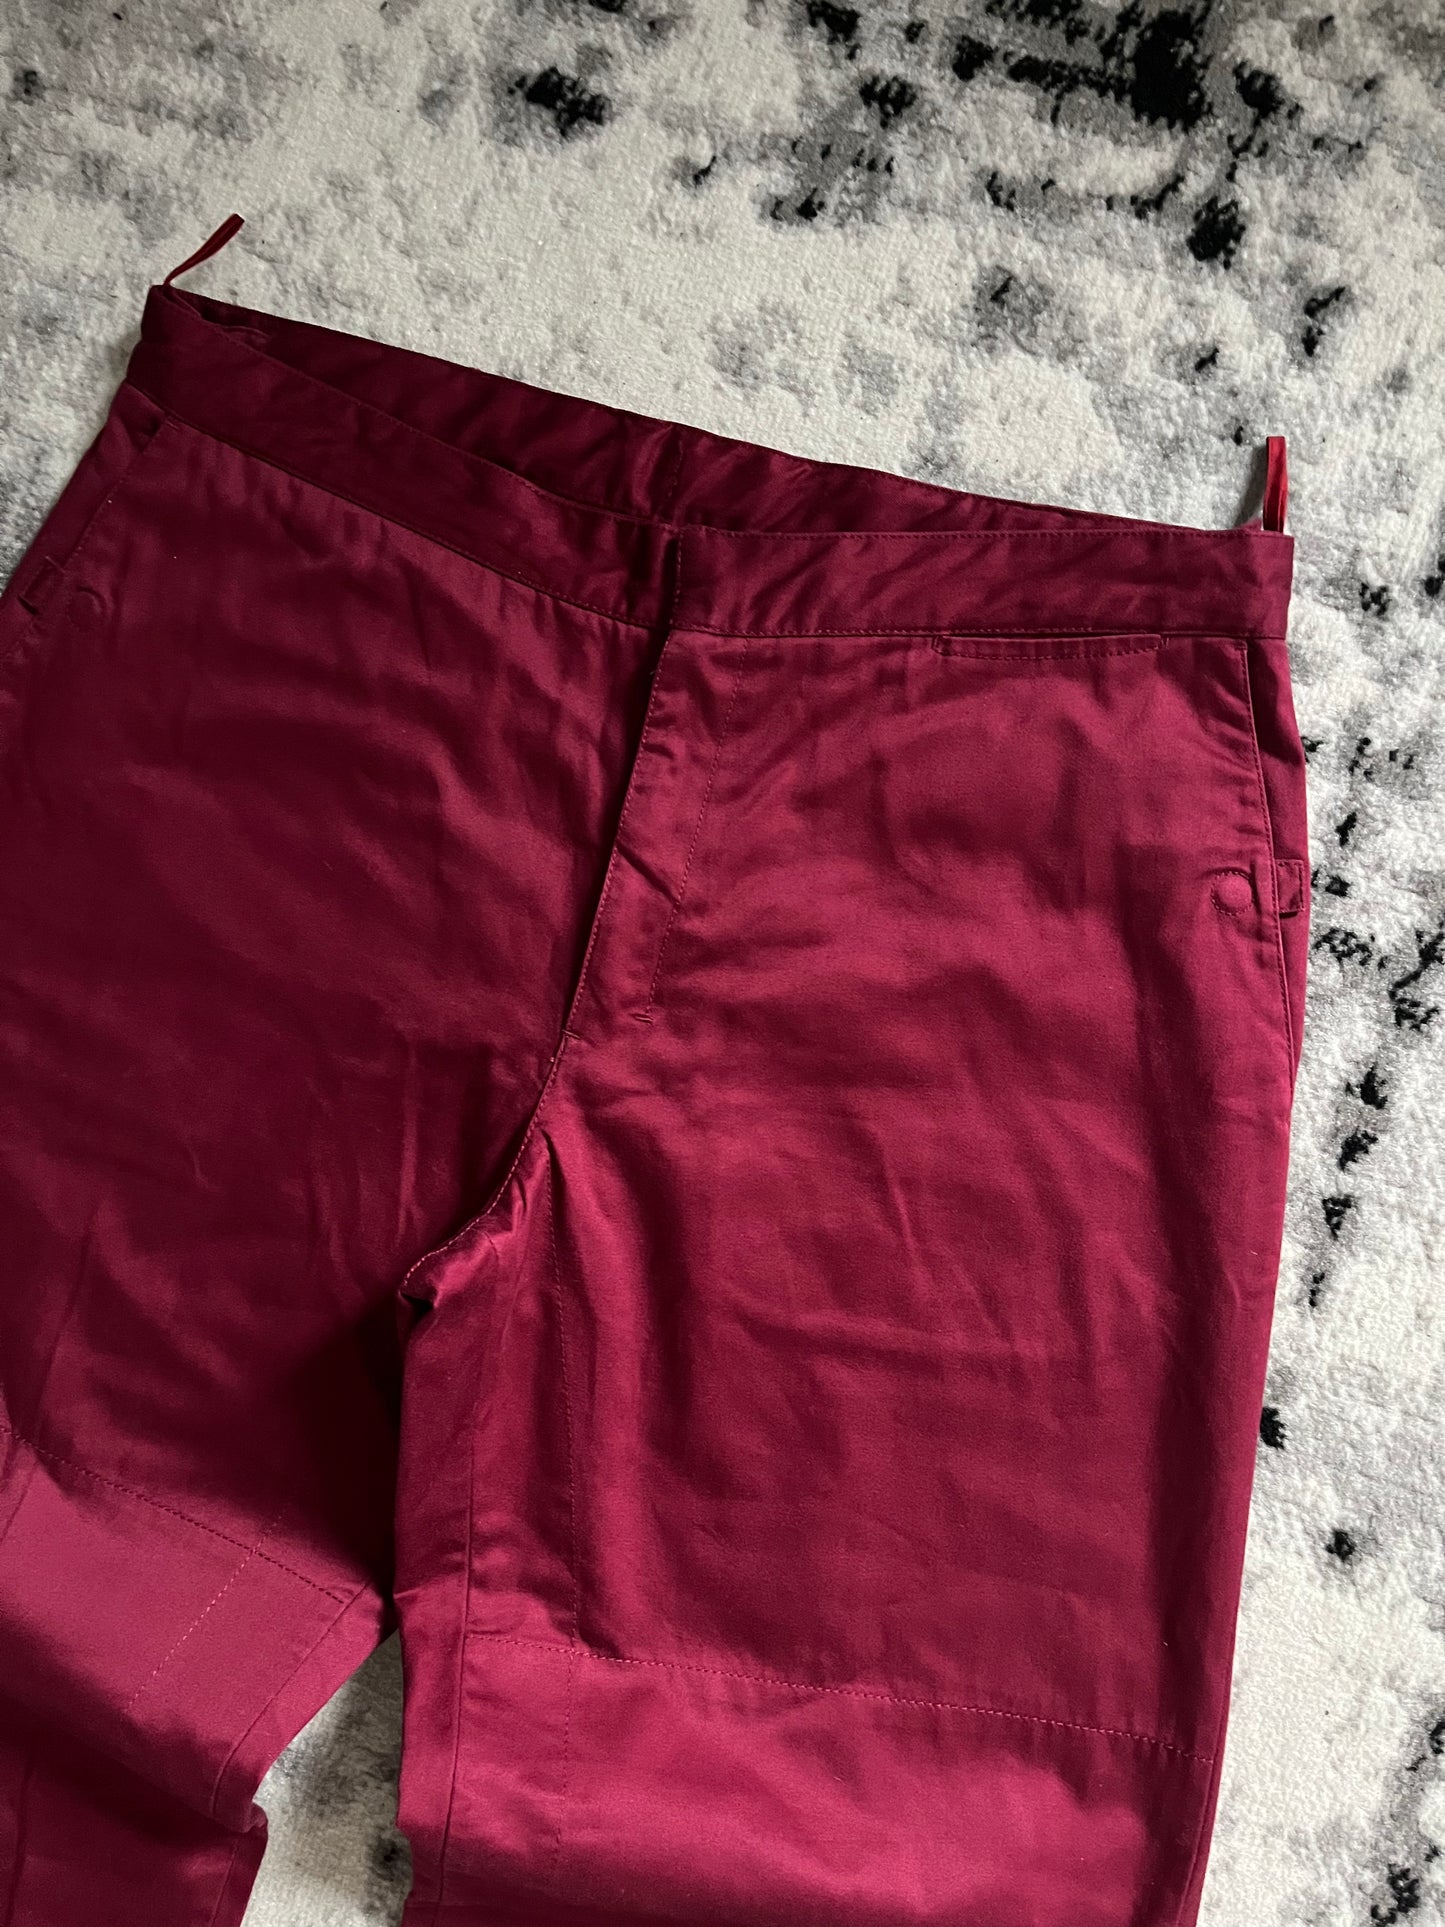 AW2003 Prada Linea Rossa Bordeaux Pants (XL)